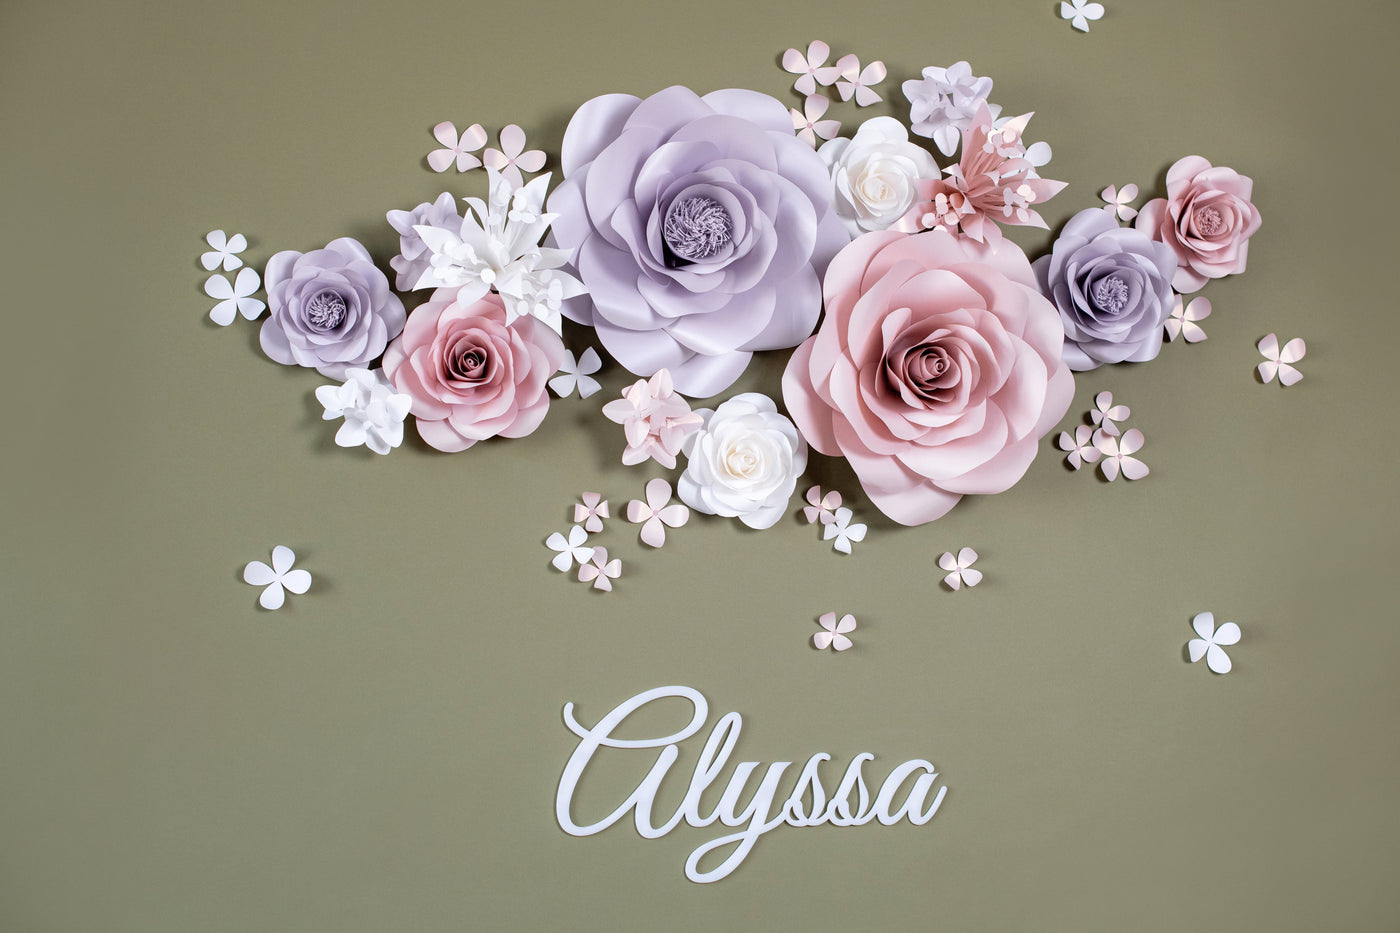 Alyssa's Nursery-Perfect Handmade Paper Flowers